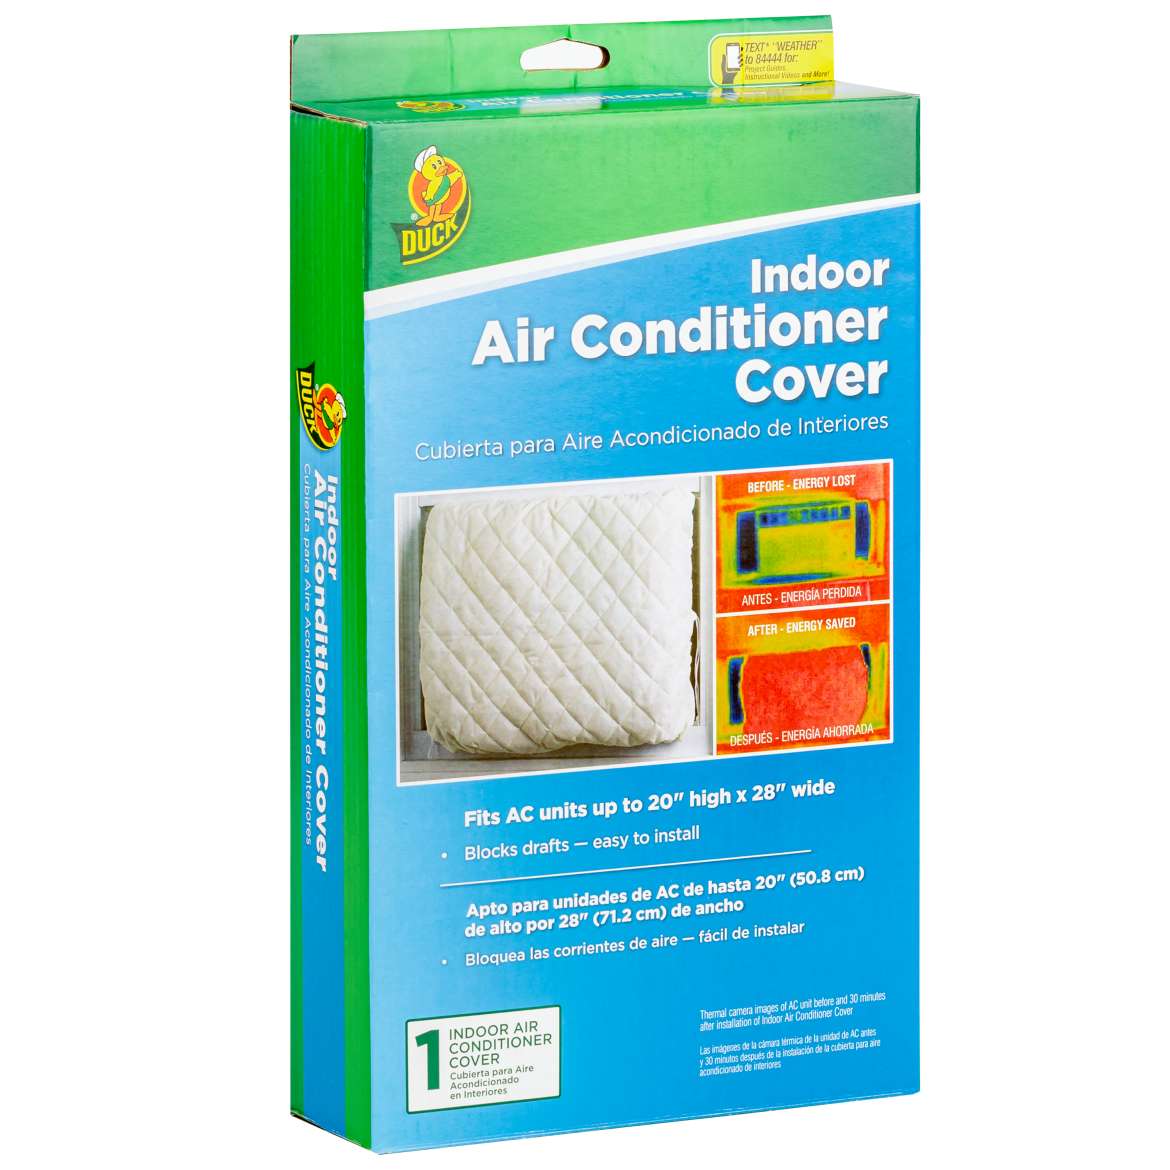 Indoor Window Air Conditioner Cover Image